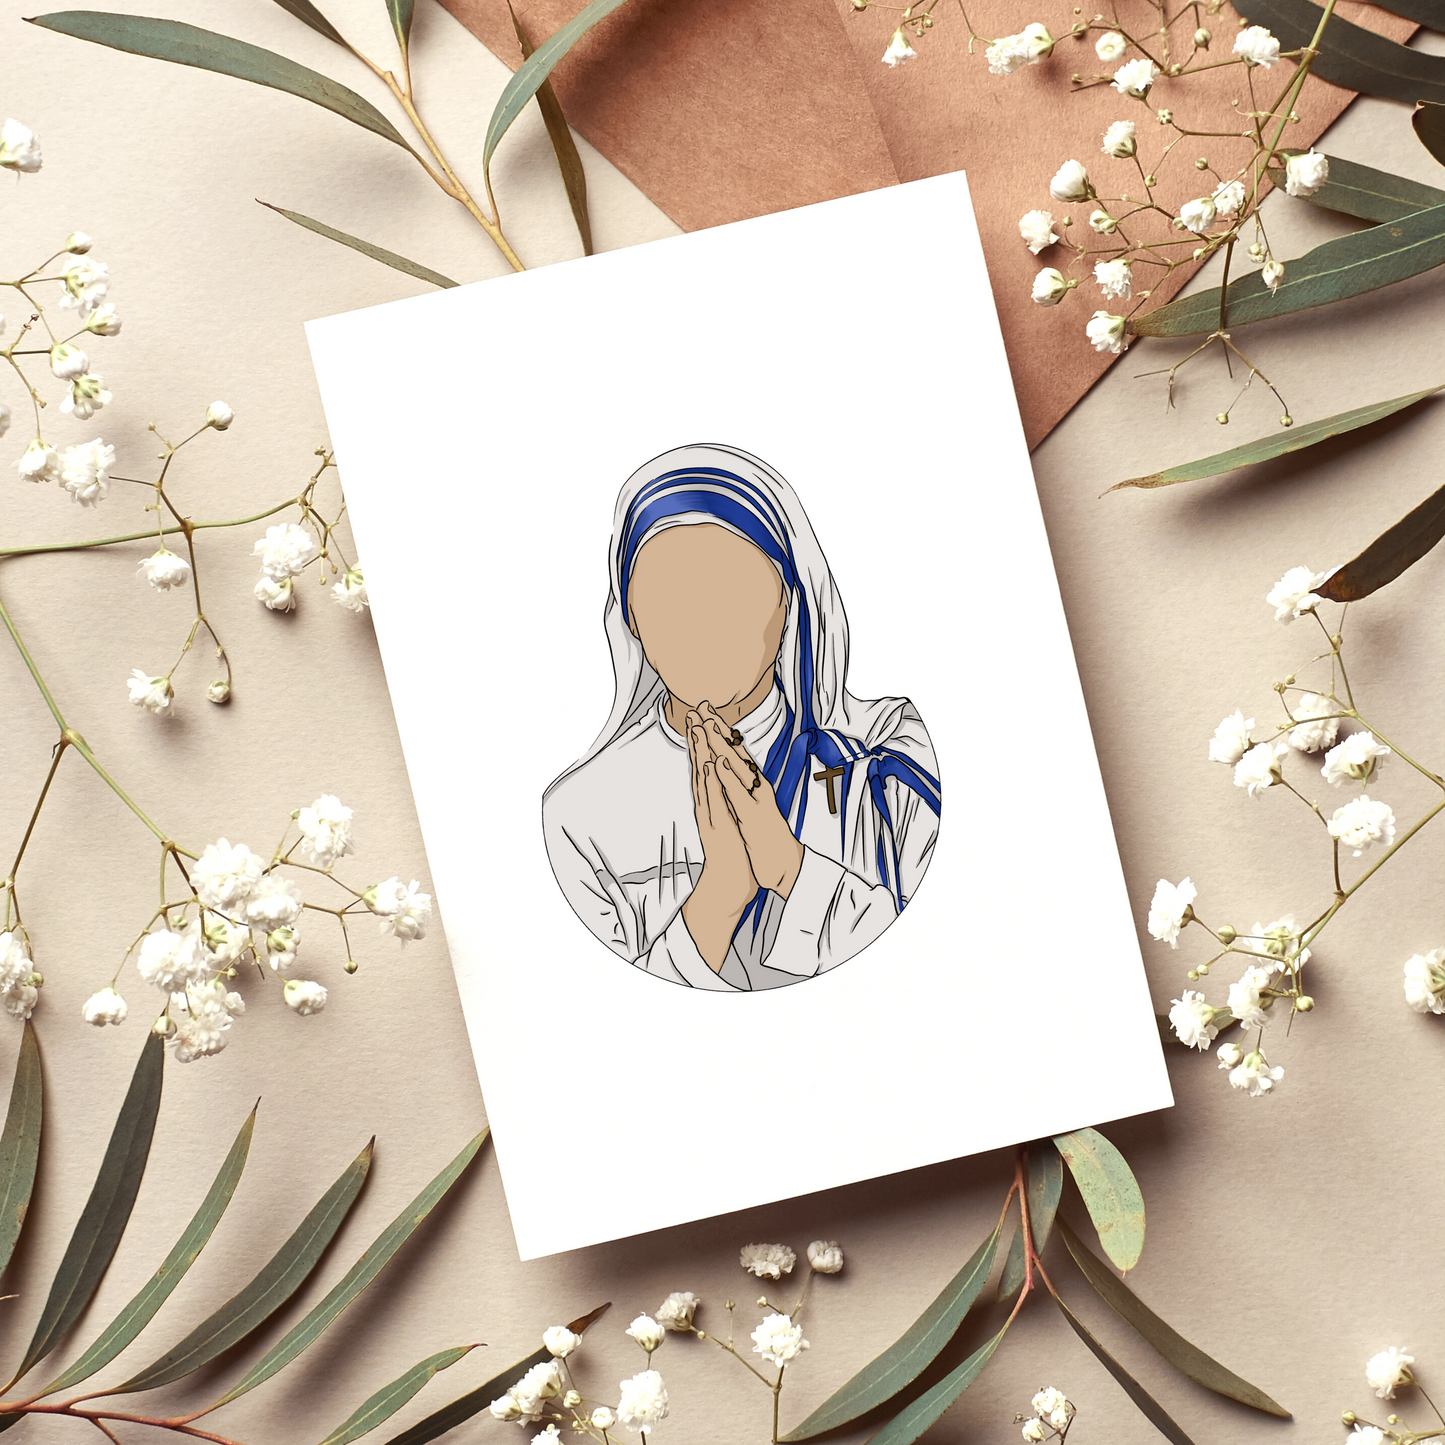 Mother Teresa - 5"x7" Print